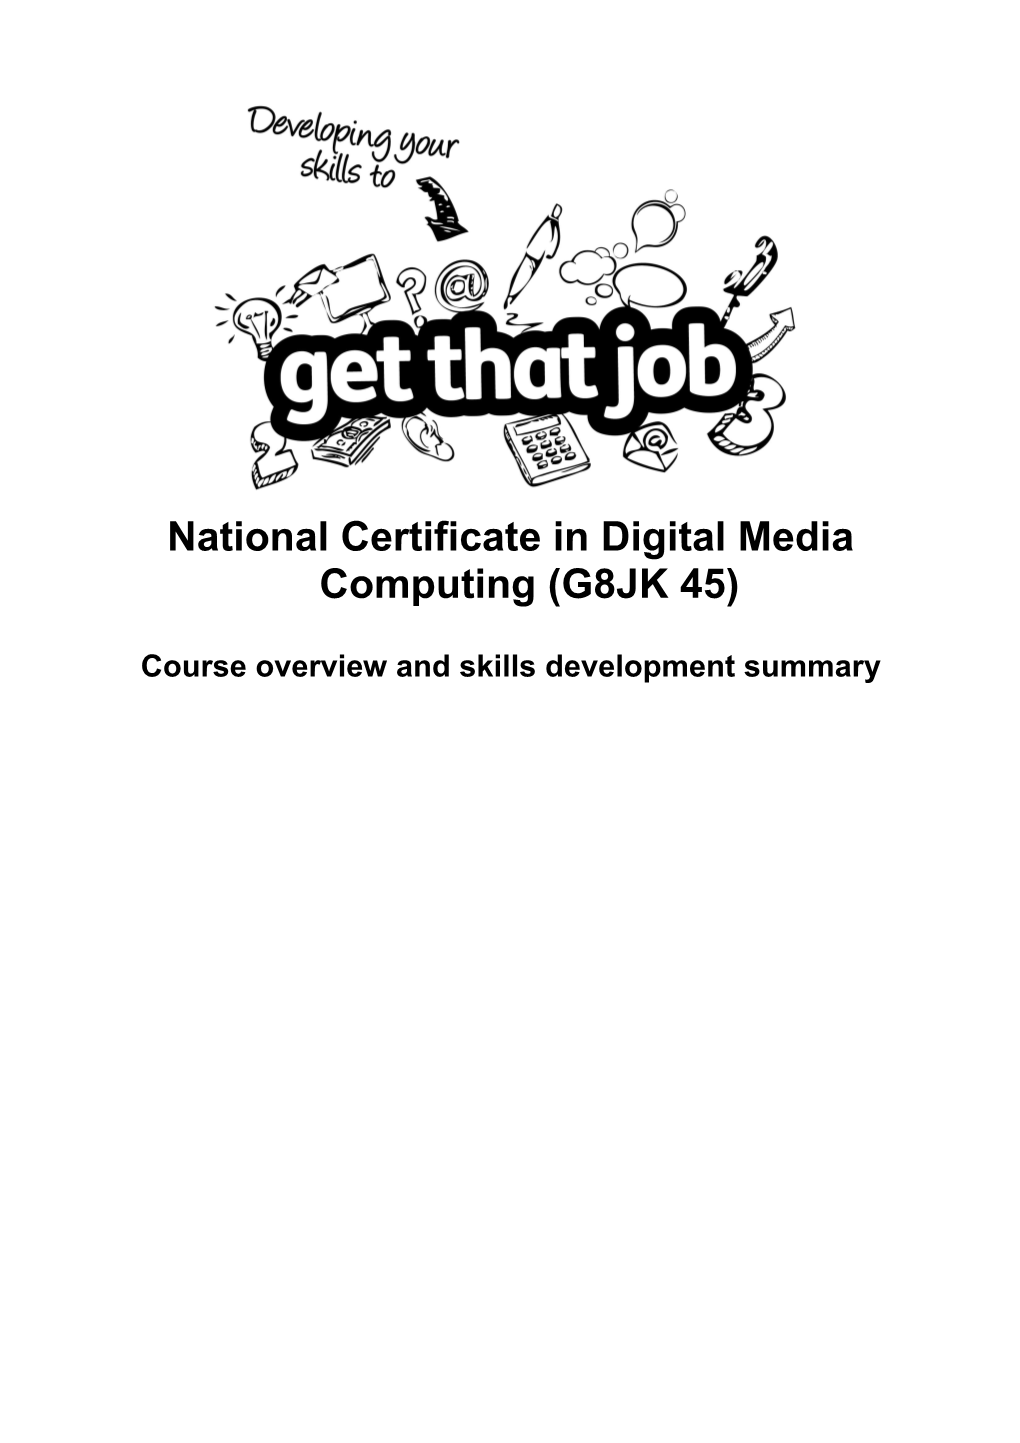 National Certificate in Digital Media Computing (G8JK 45)